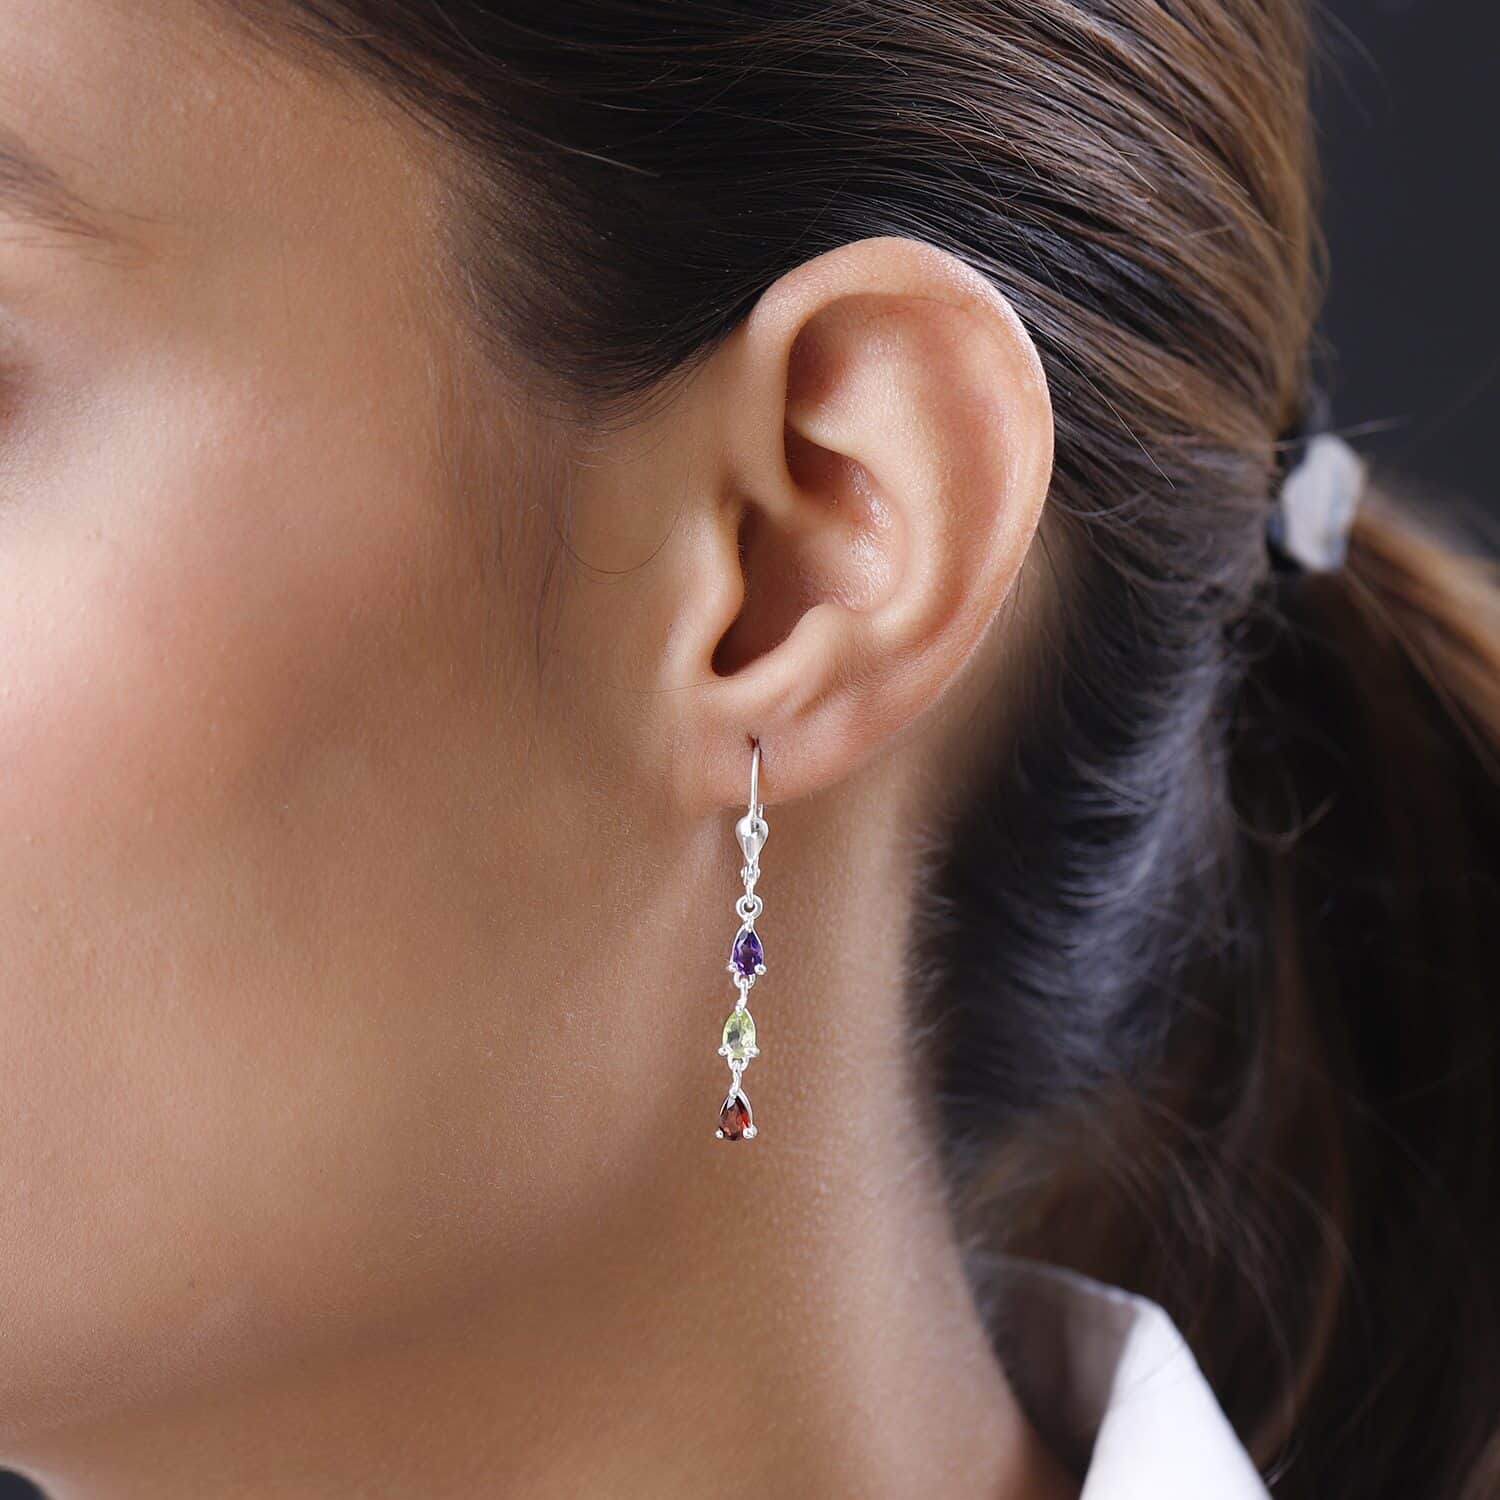 Buy Multi Gemstone Dangling Earrings in Sterling Silver 1.15 ctw